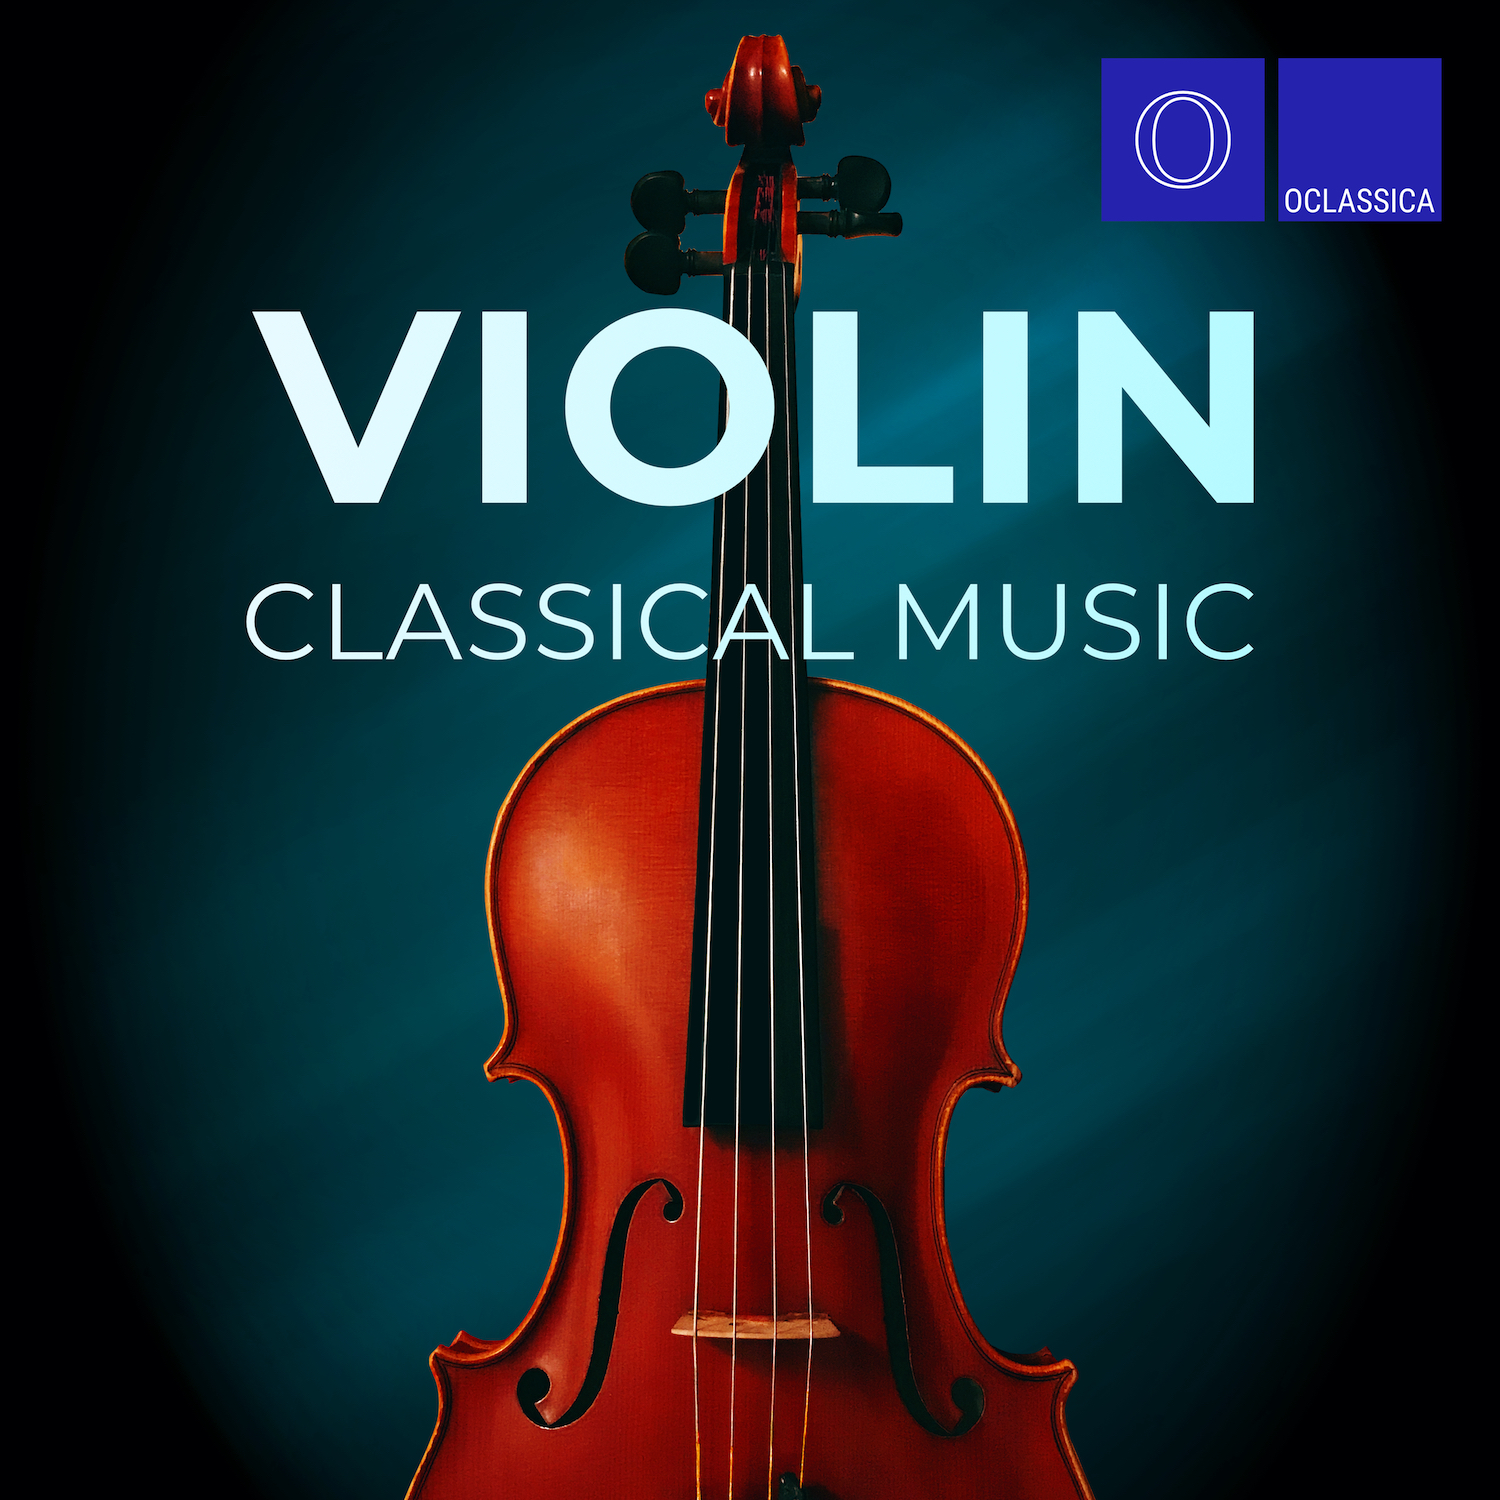 Violin Classical Music